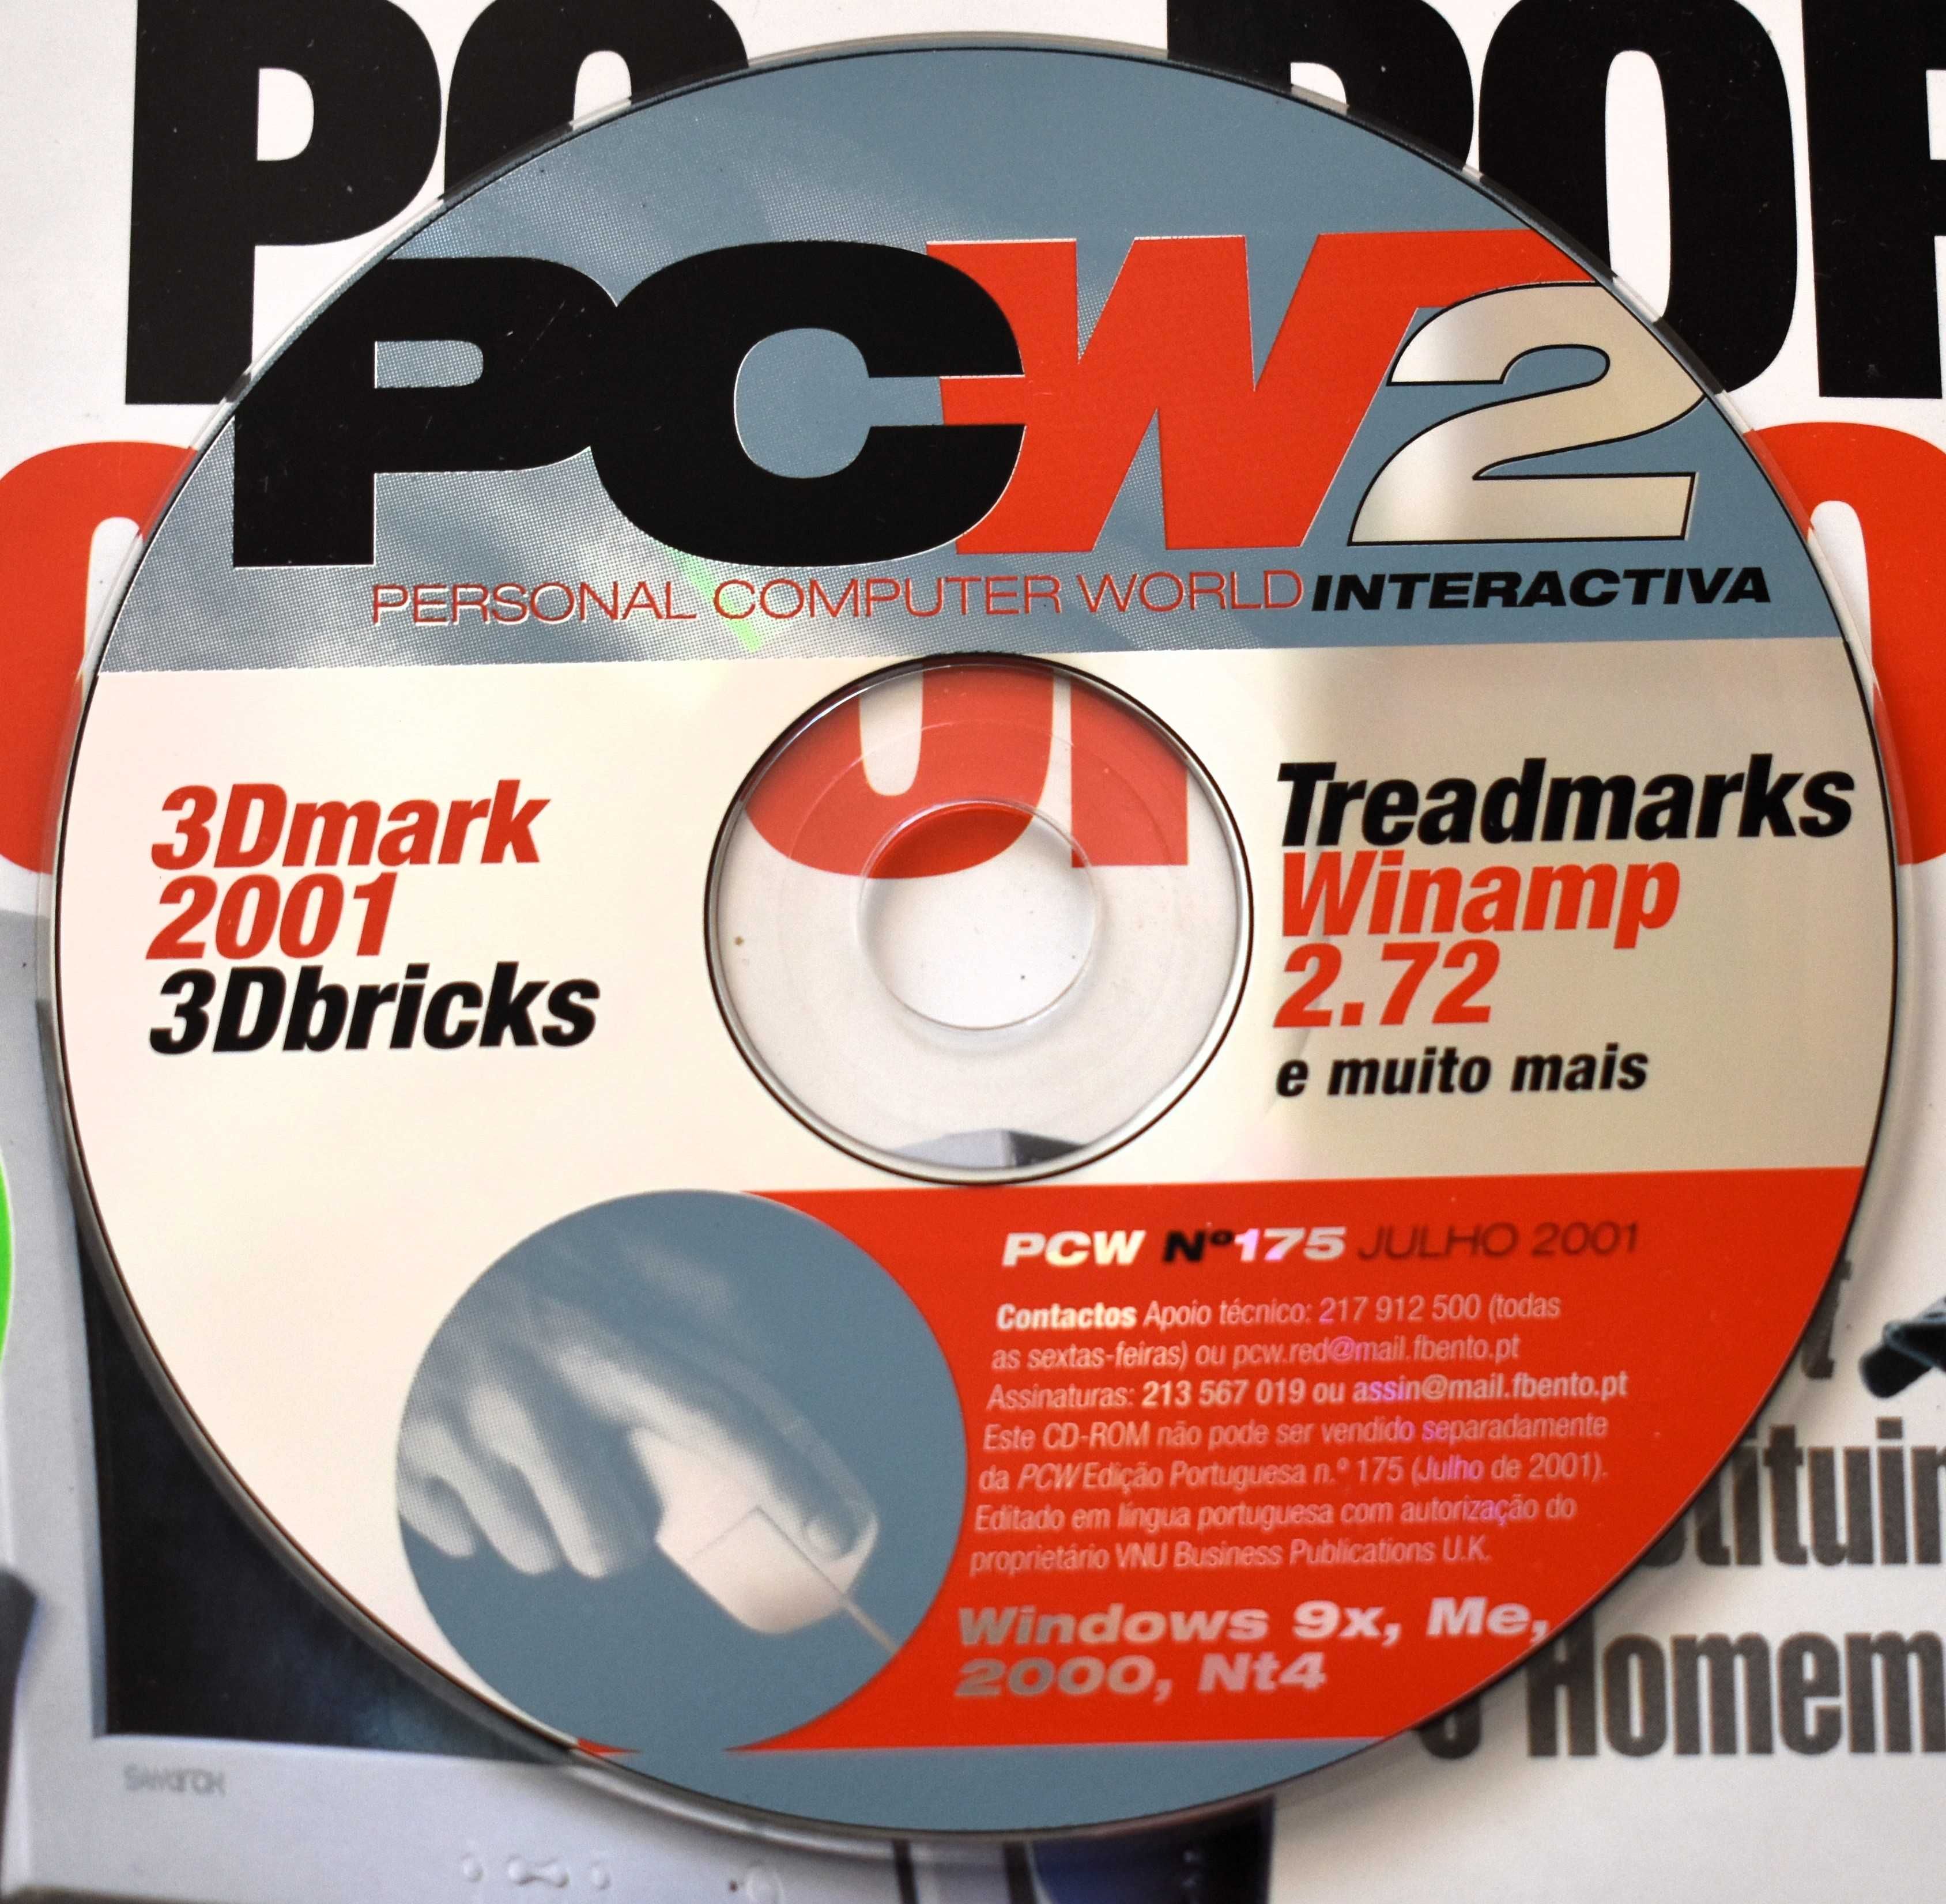 Revista PCW (Personal Computer World) nº 175 + 3 CD-ROM's (2001)